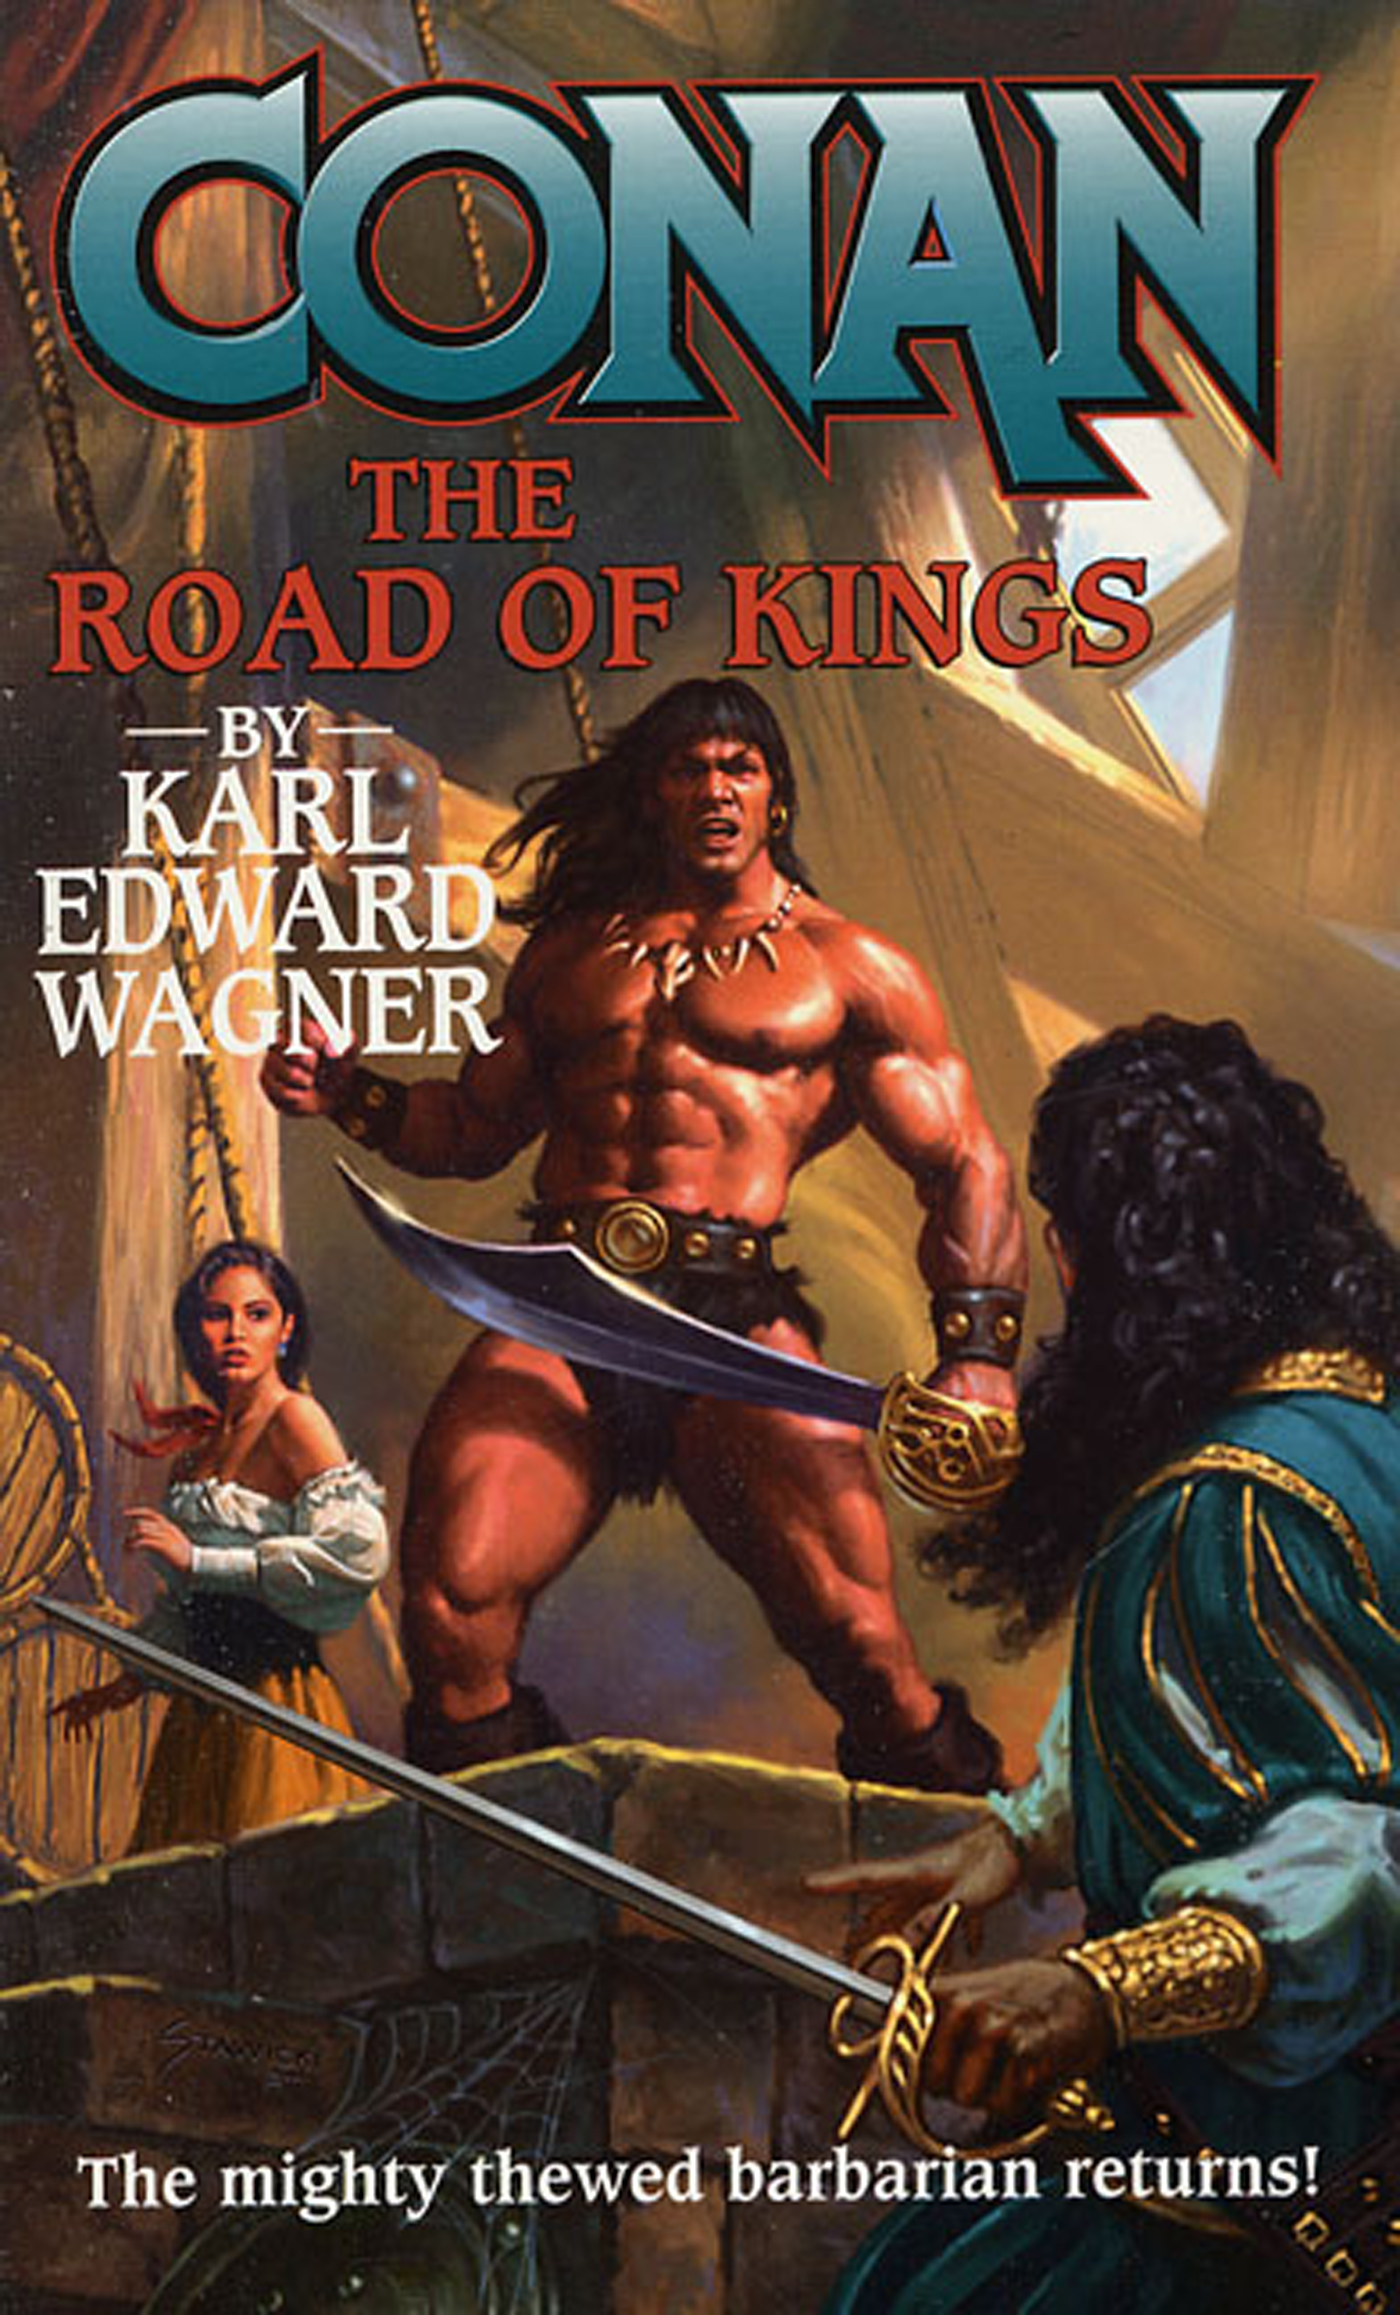 Conan: Road of Kings by Karl Edward Wagner